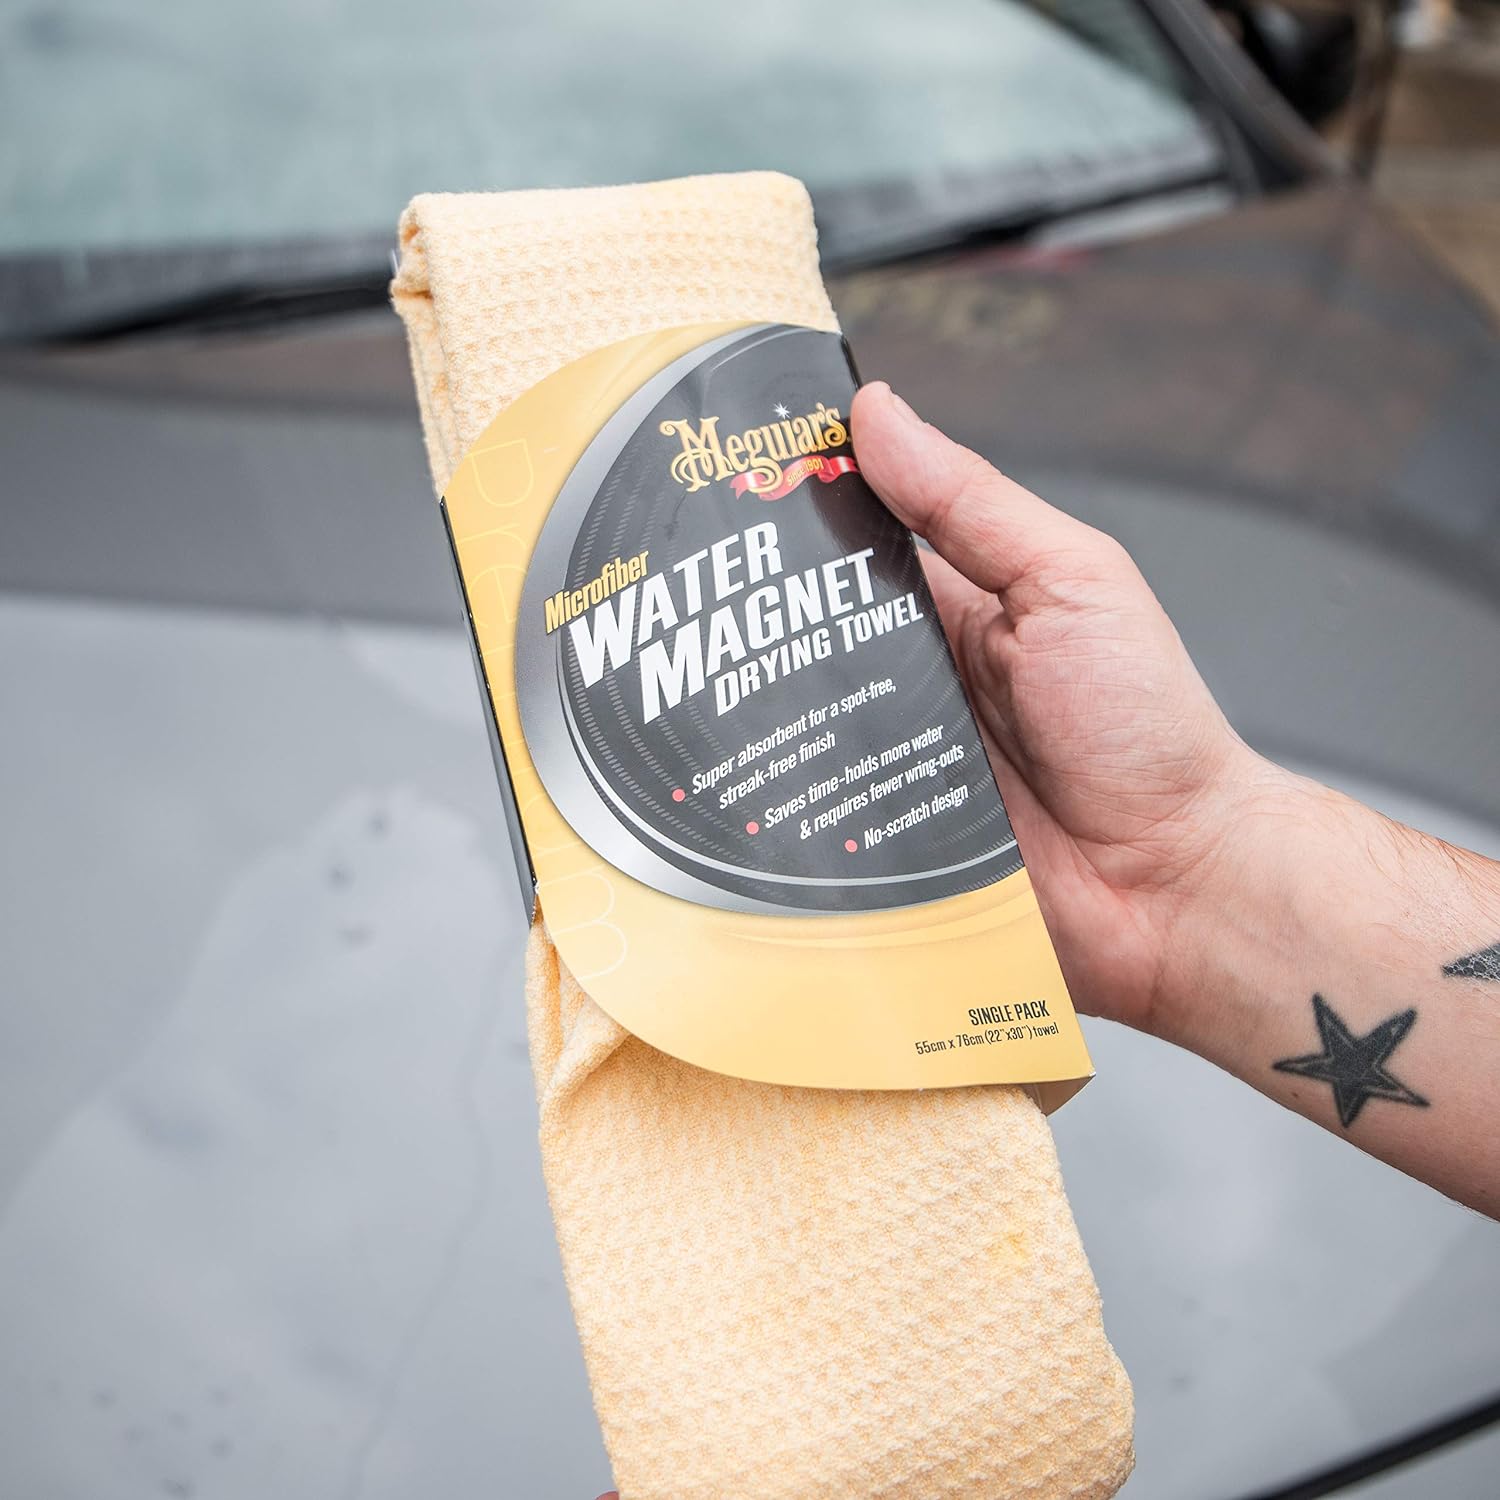 MEGUIAR's Ultimate Car Waterless Wash & Wax Shampoo